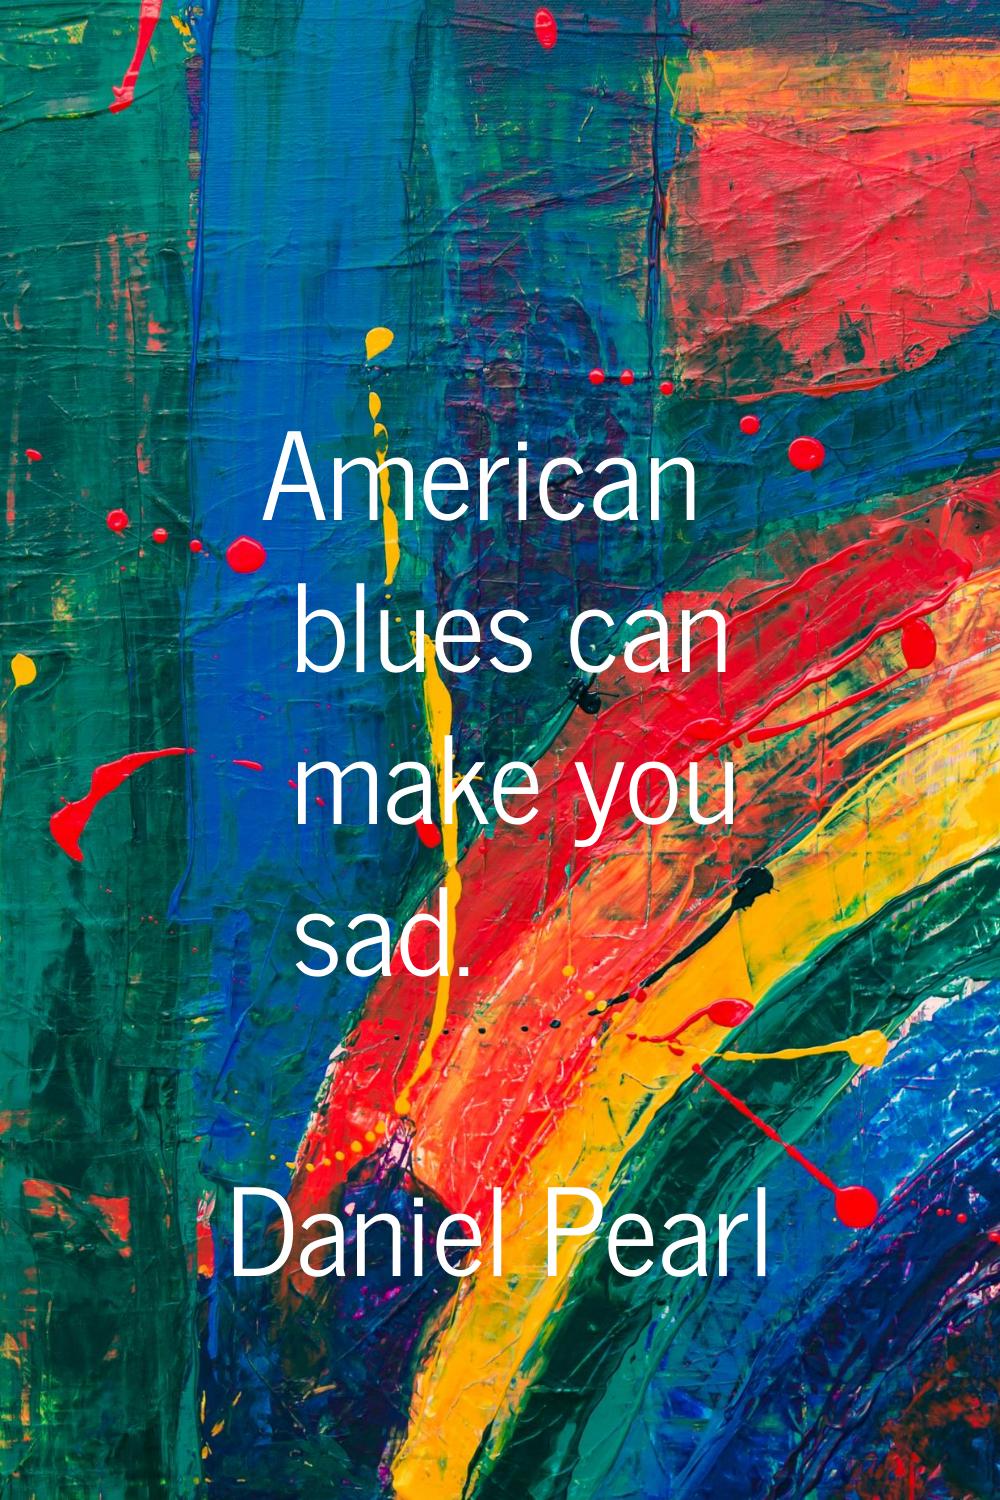 American blues can make you sad.